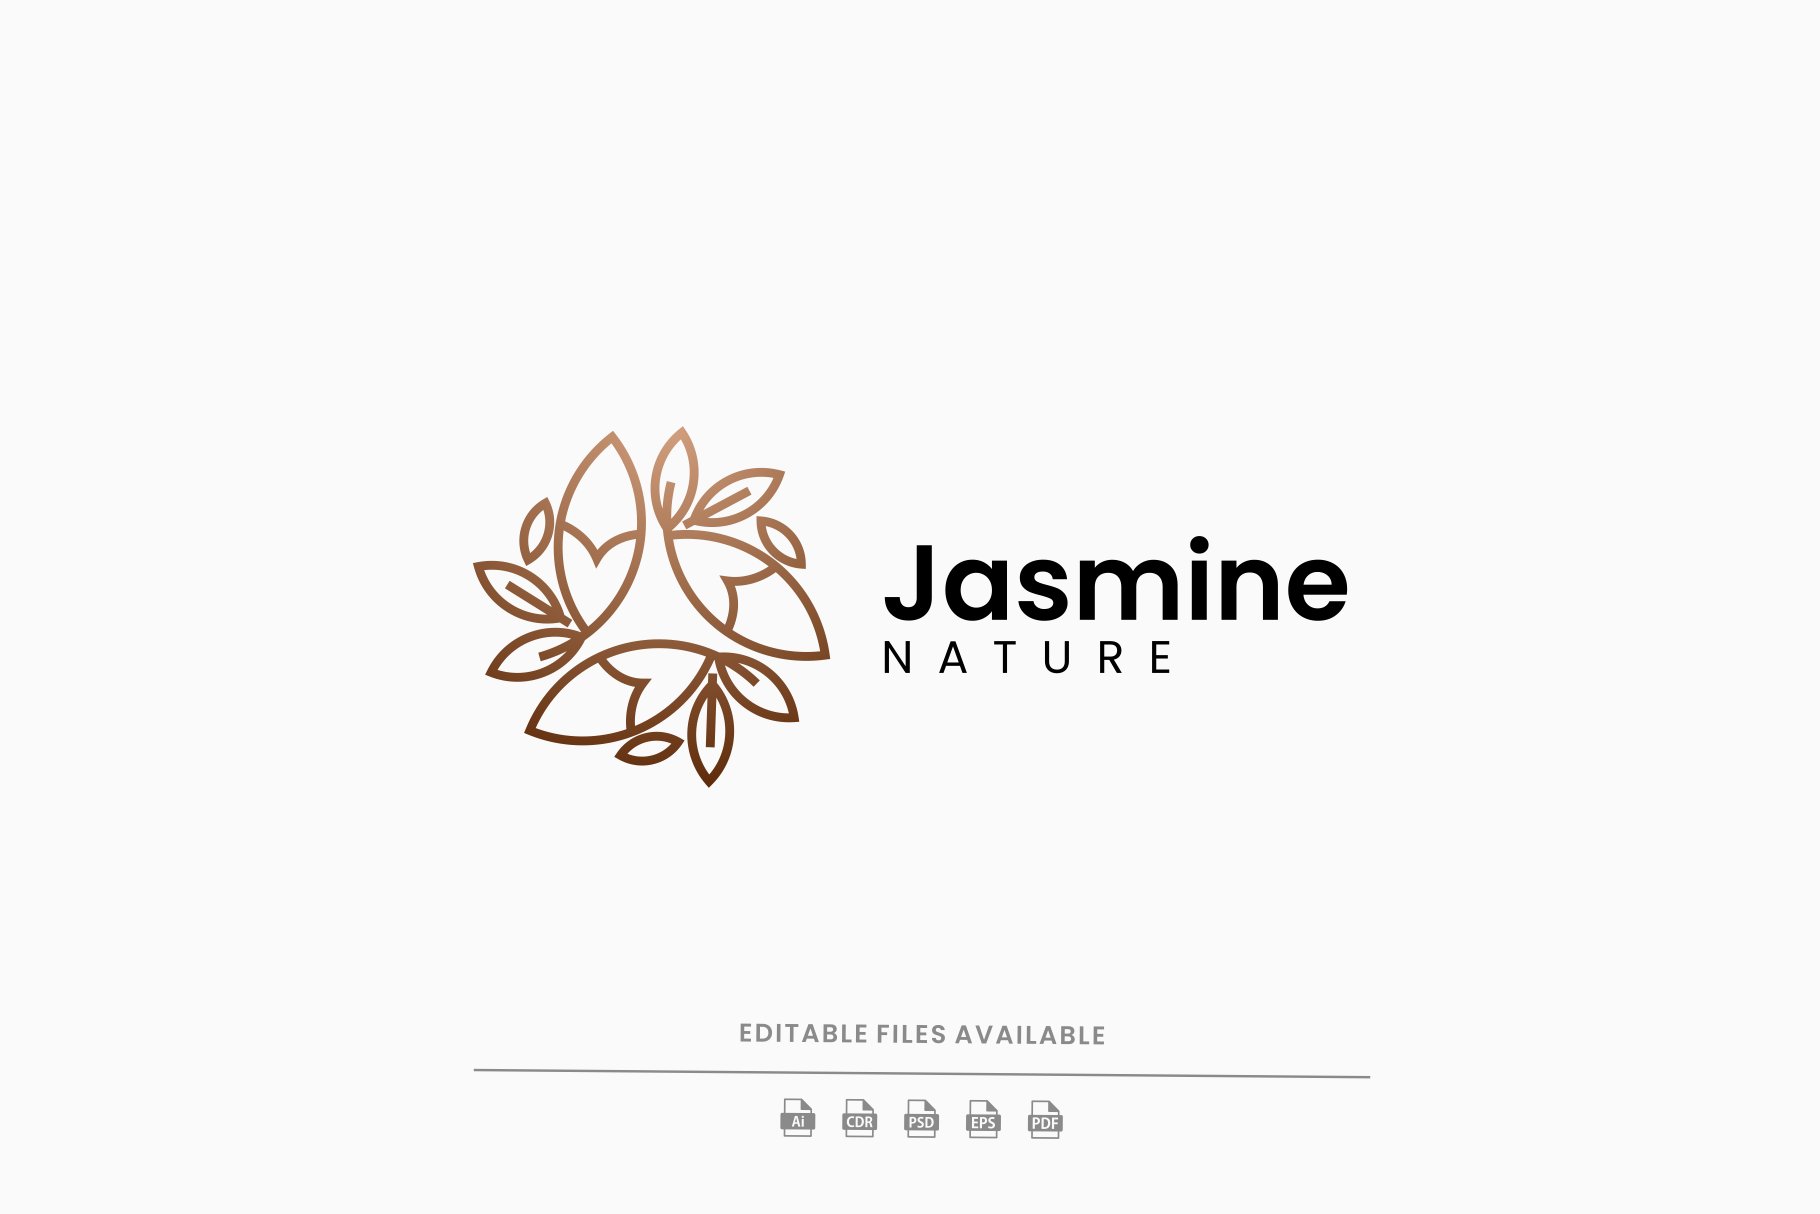 Jasmine Line Art Logo cover image.